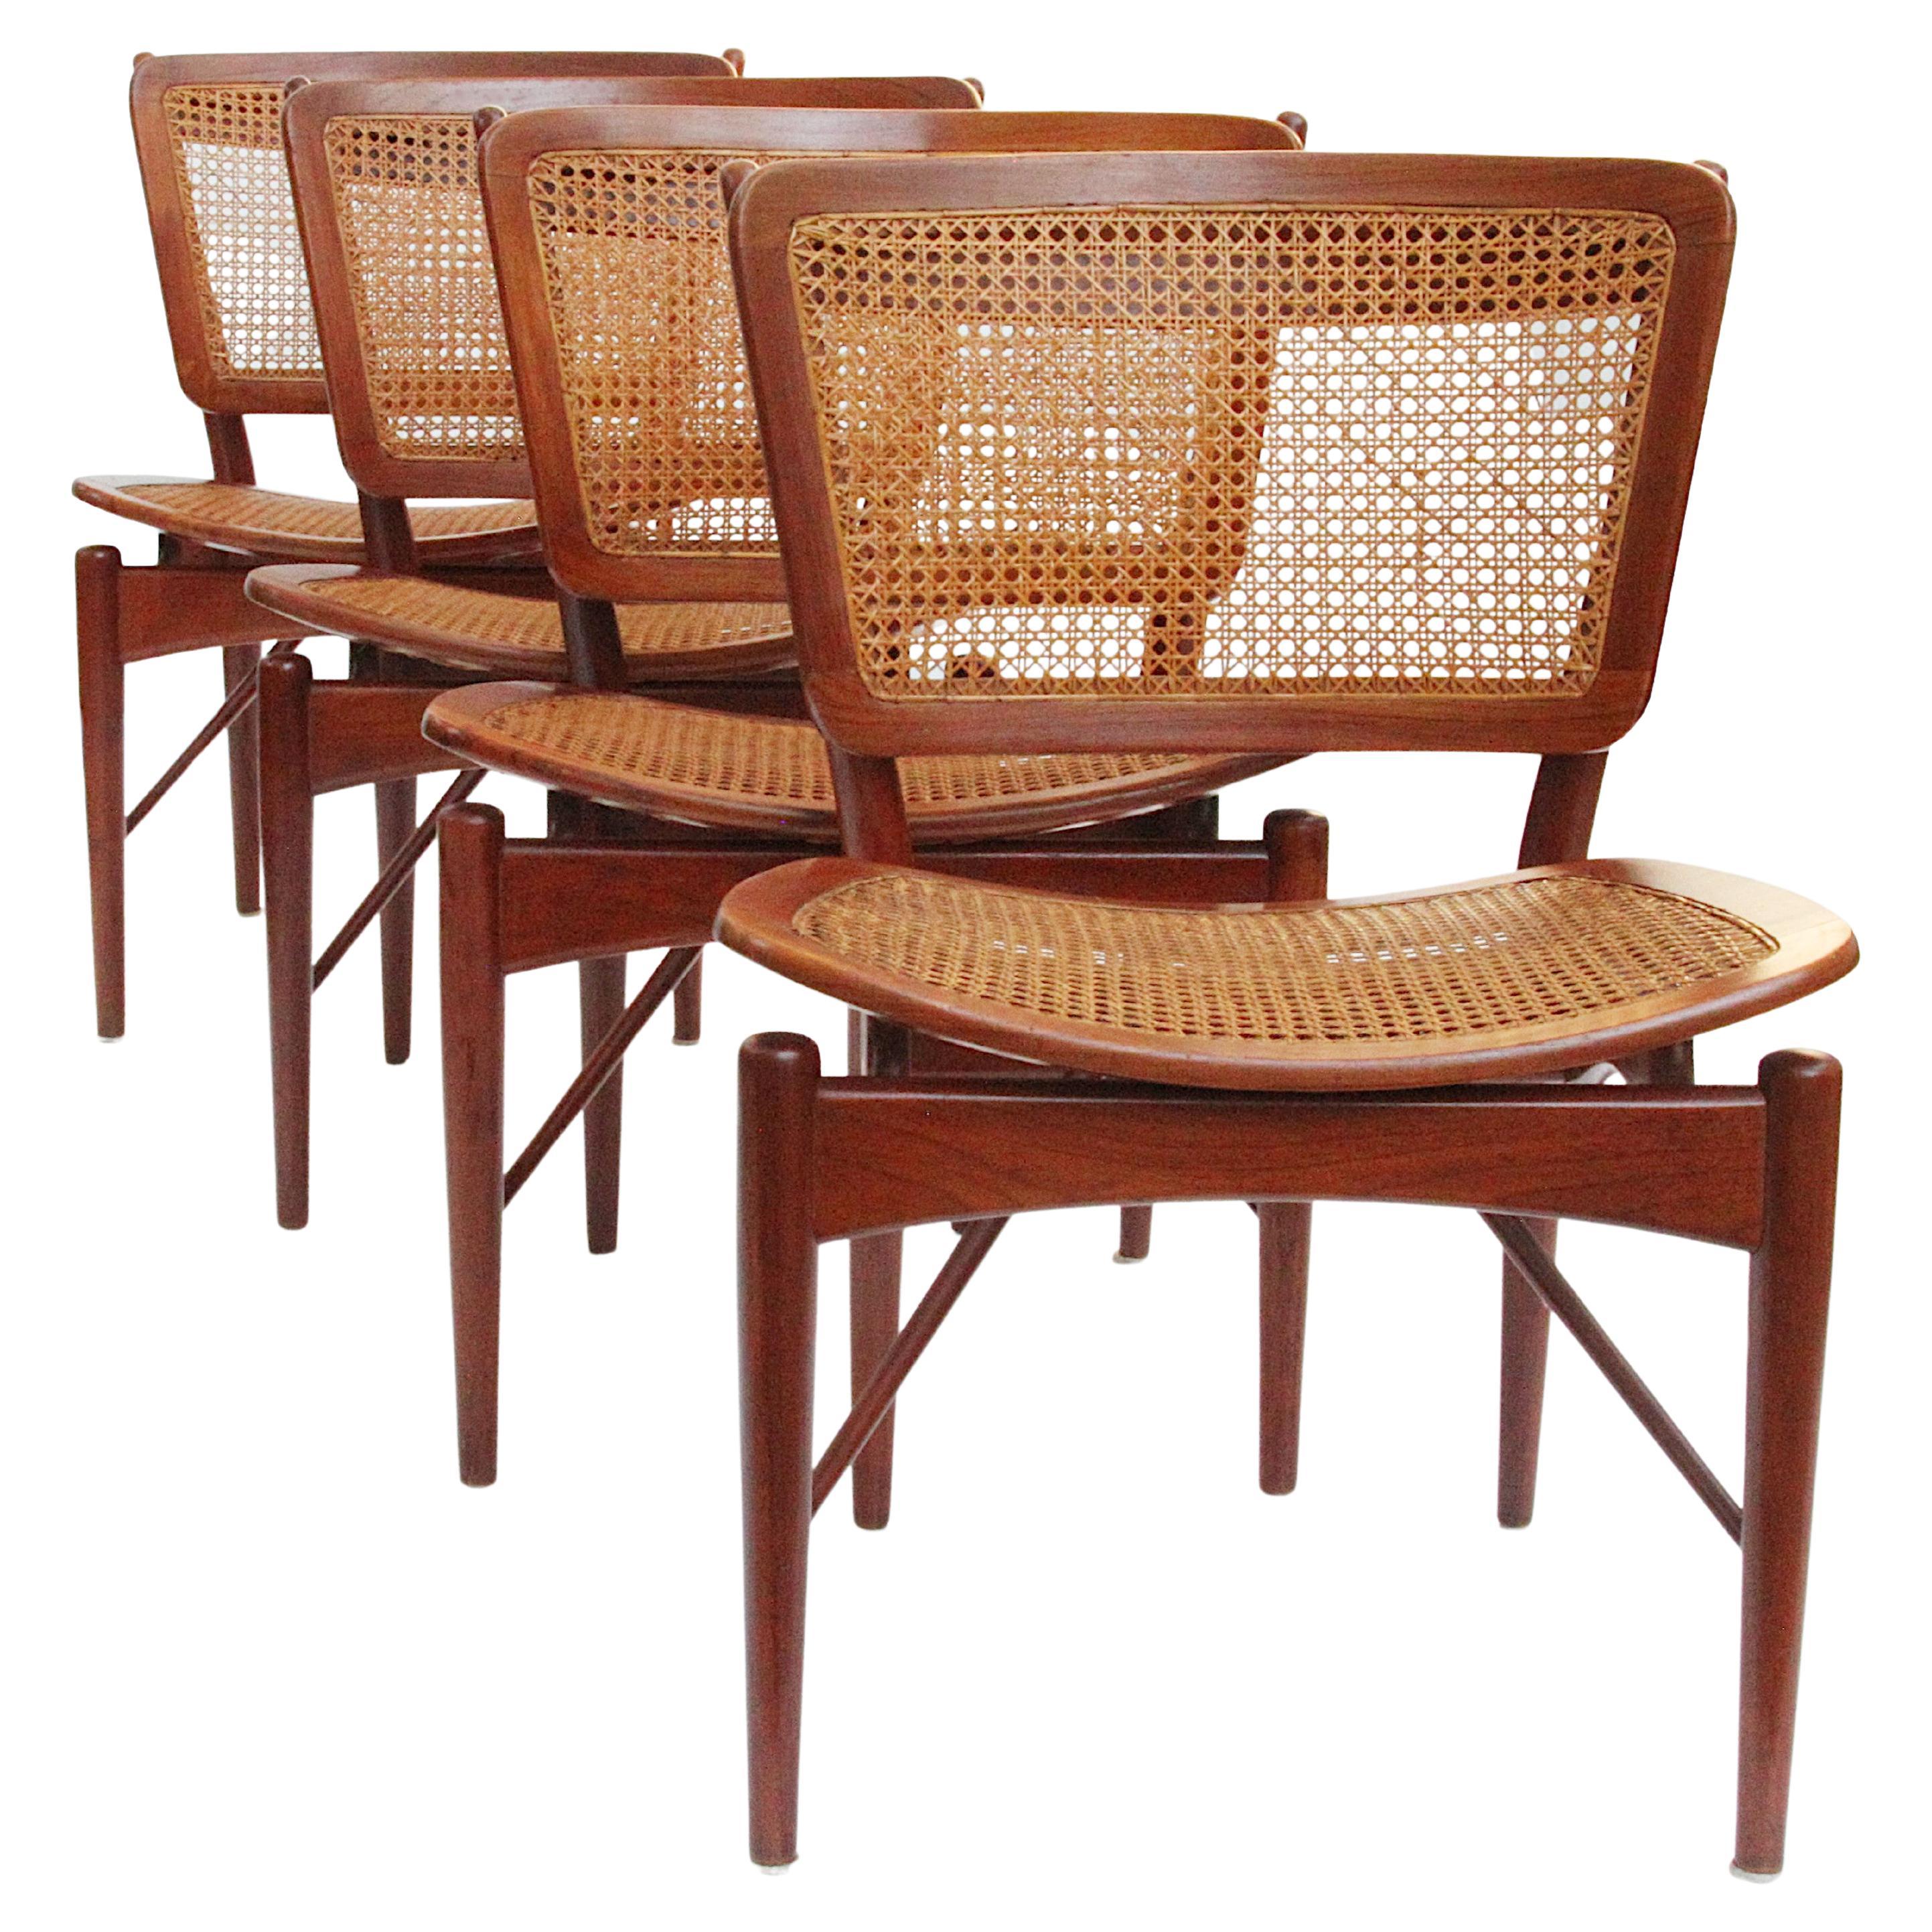 Set of 4 Original Finn Juhl Model NV 51/403 Teak & Cane Dining Chairs by Baker